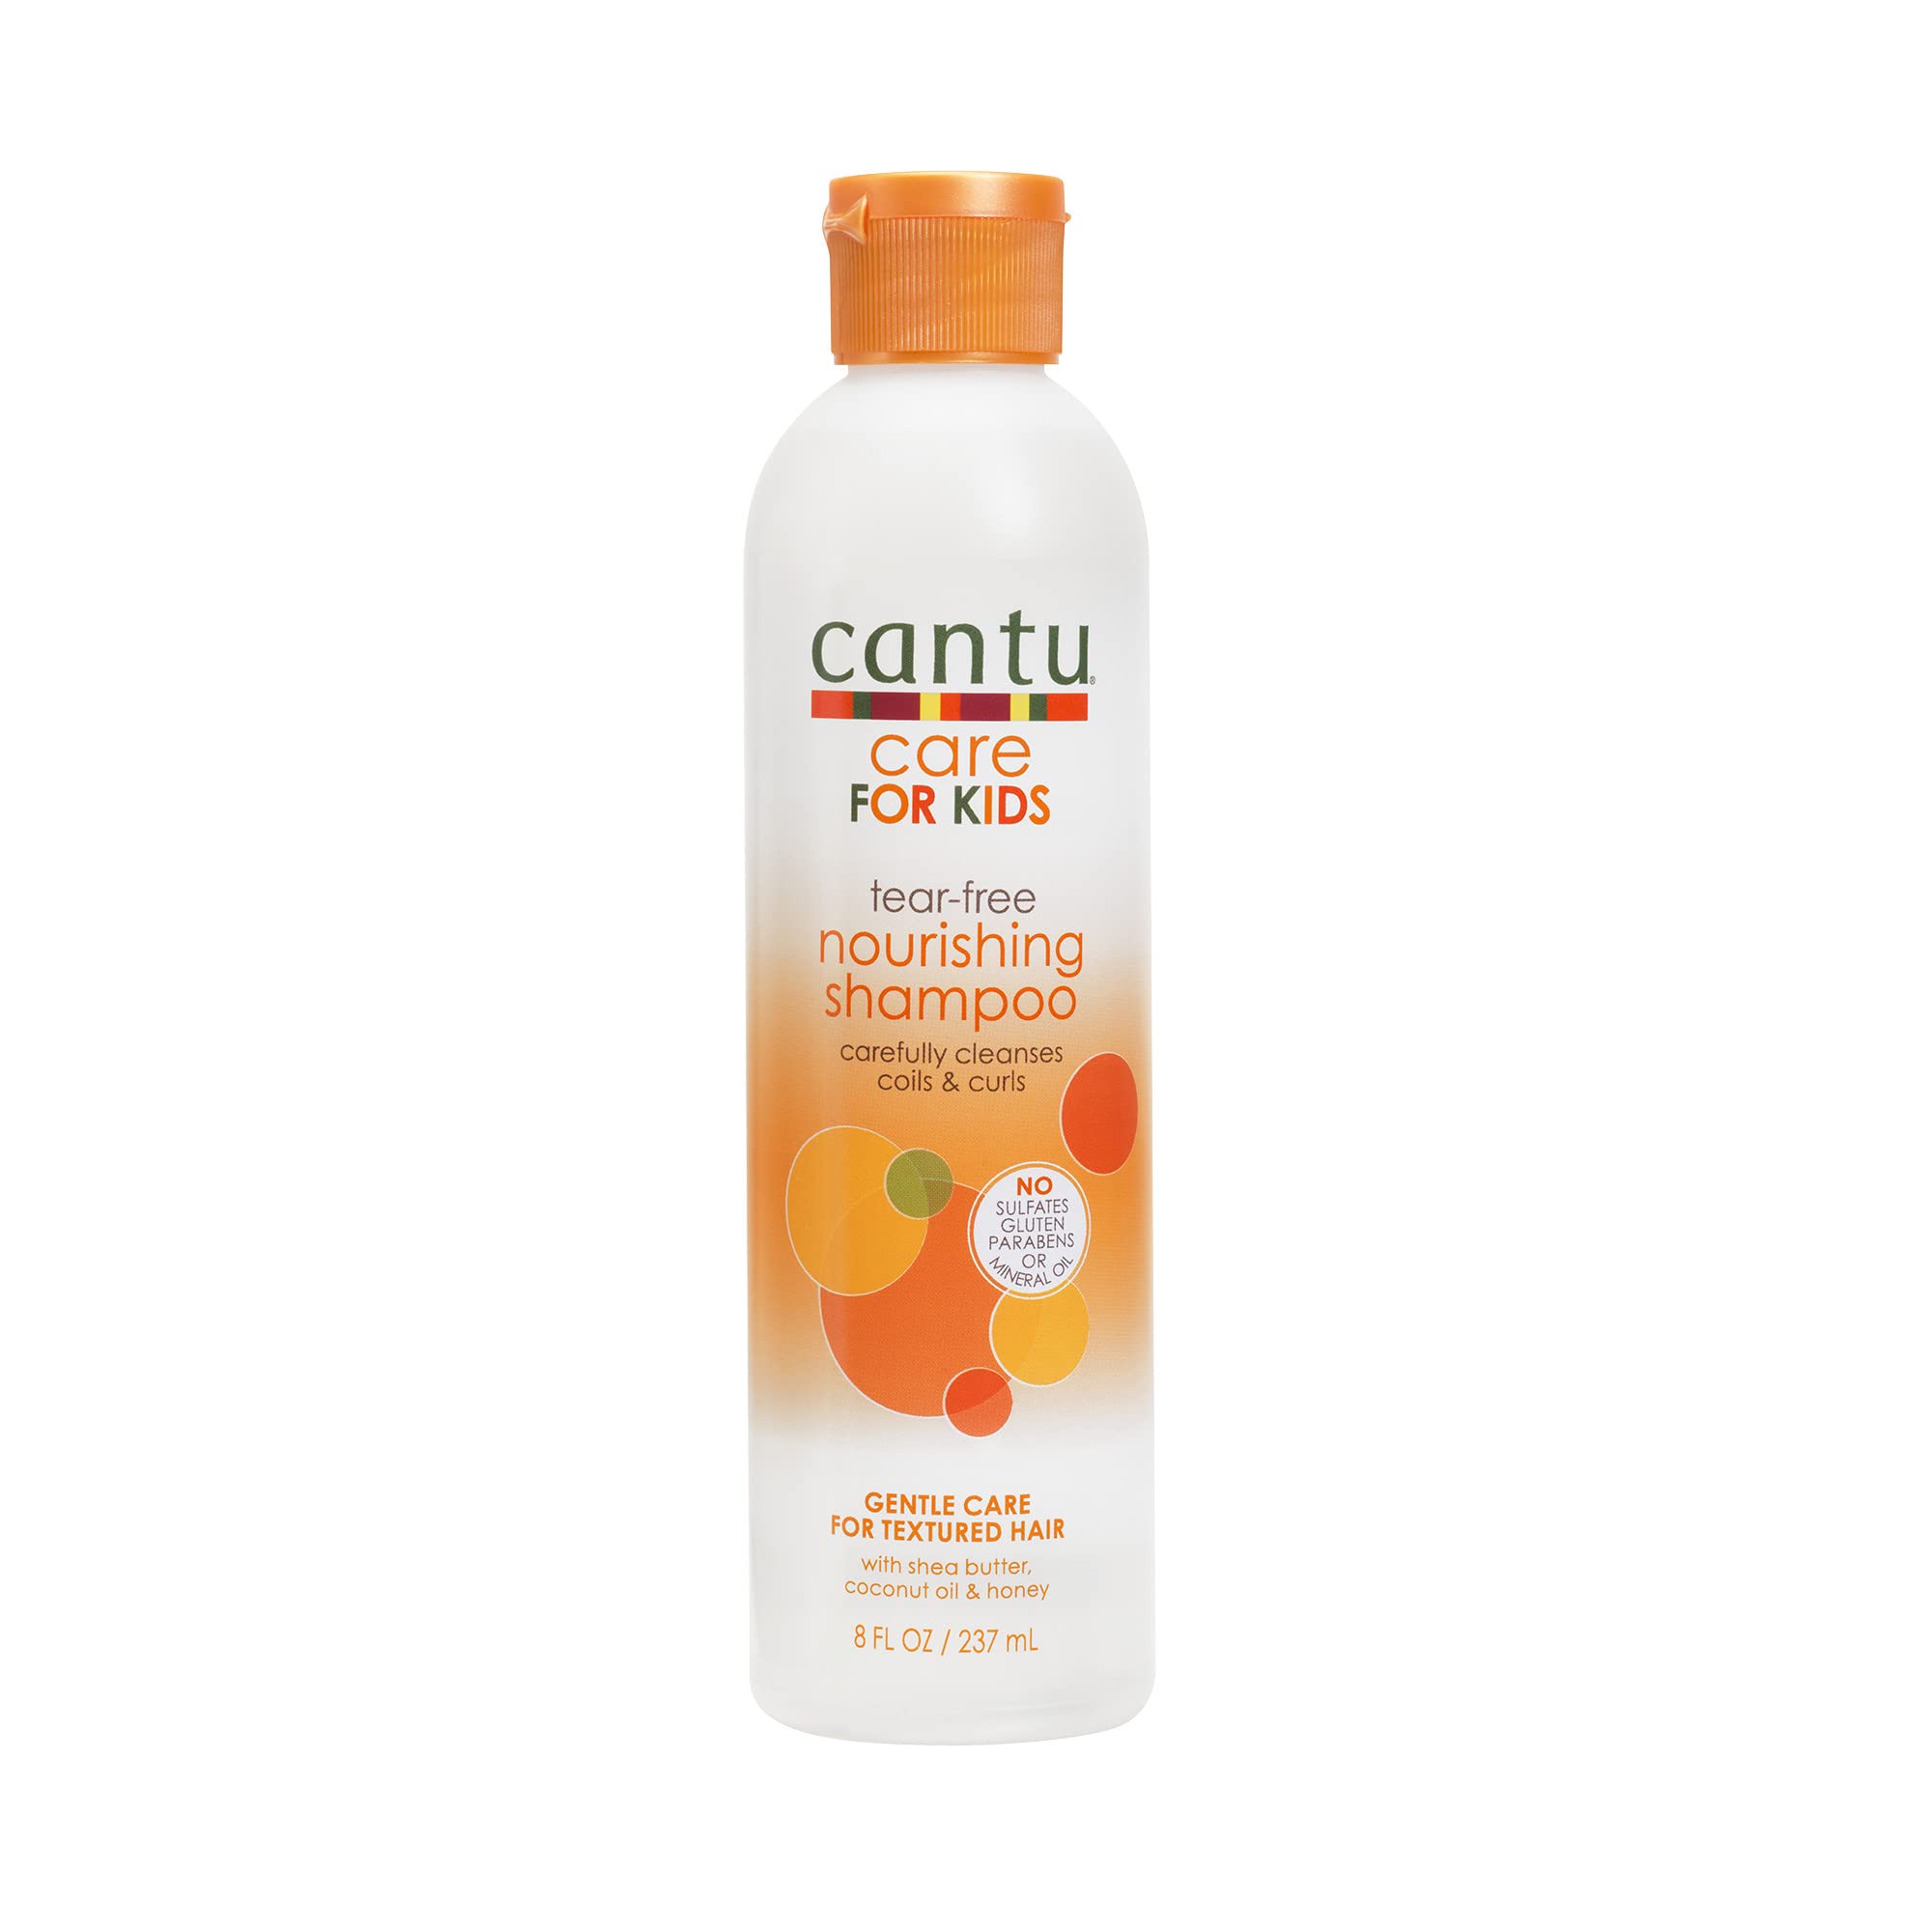  Cantu Care For Kids Tear-Free Nourishing Shampoo Gentle Care  for Textured Hair 8 fl oz (237 ml)